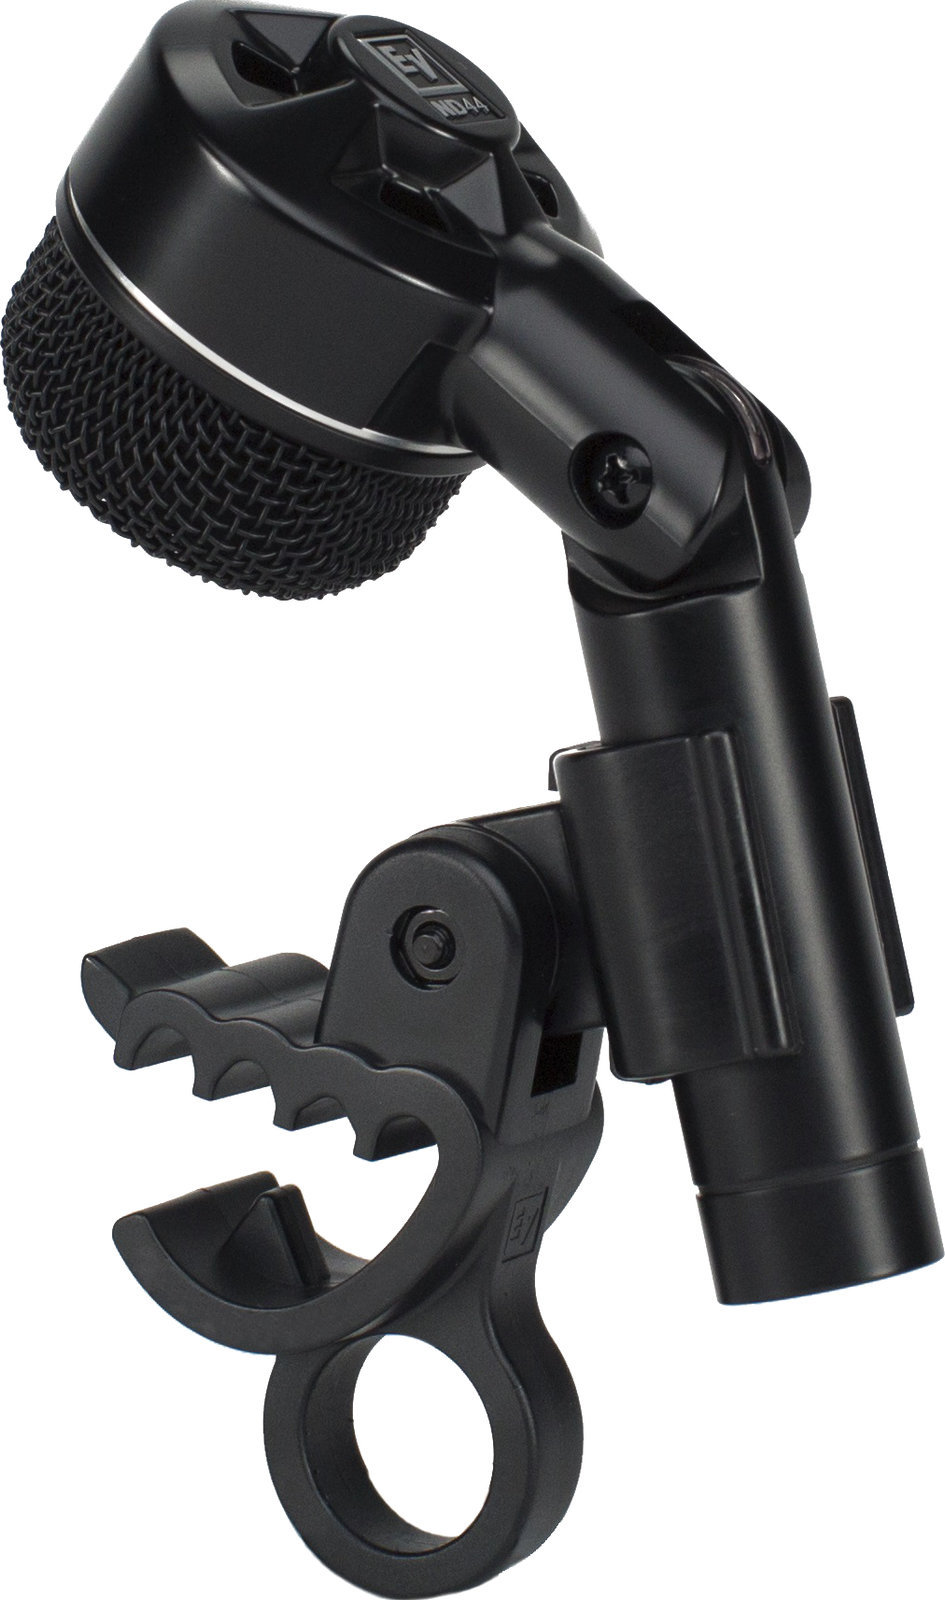 Kondezatorski mikrofon za instrumente Electro Voice ND44 Dynamic Tight Cardioid Instrument Microphone